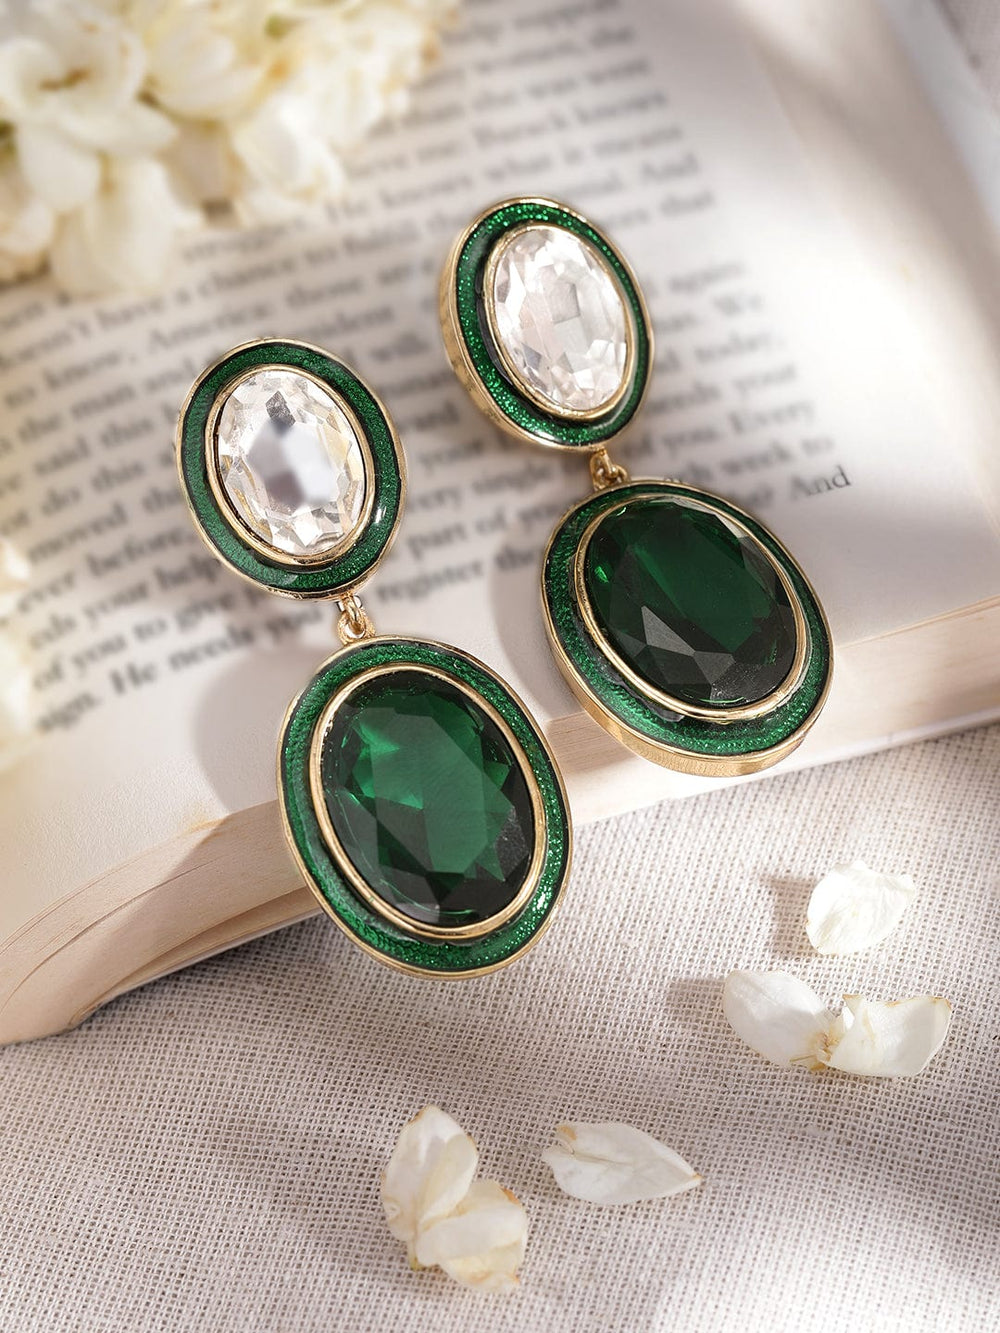 Rubans 22K Antique Gold Plated Emerald Crystal Studded Green Enamel Dangle Earring Earrings